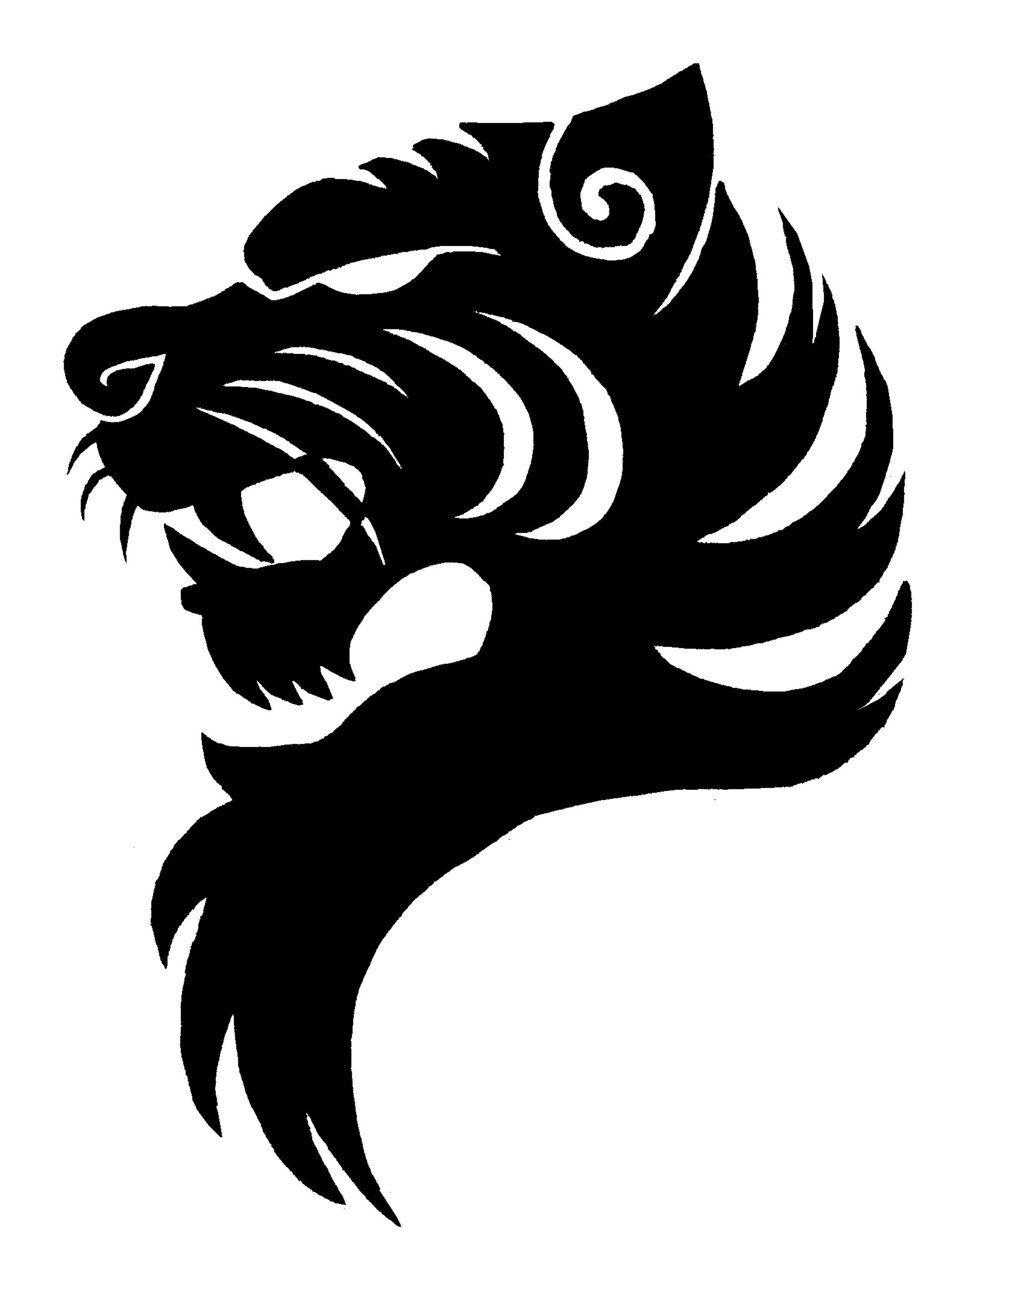 Black Tiger Logo - Tiger Logo Black And White Clipart Panda Free Clipart - Free Clipart